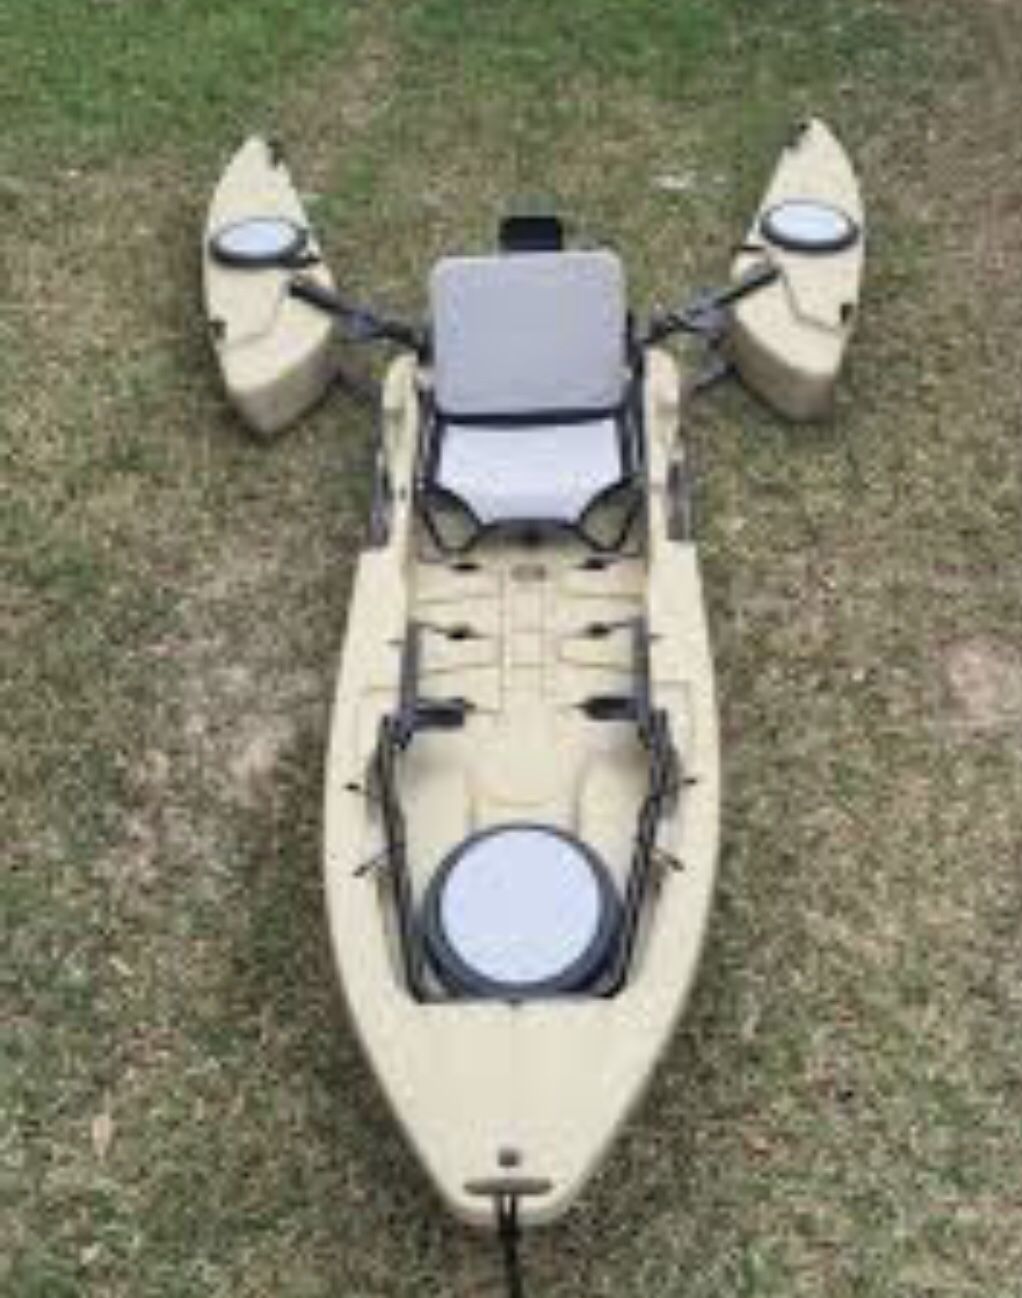 Freedom hawk pathfinder 14 fishing kayak w/ trolling motor